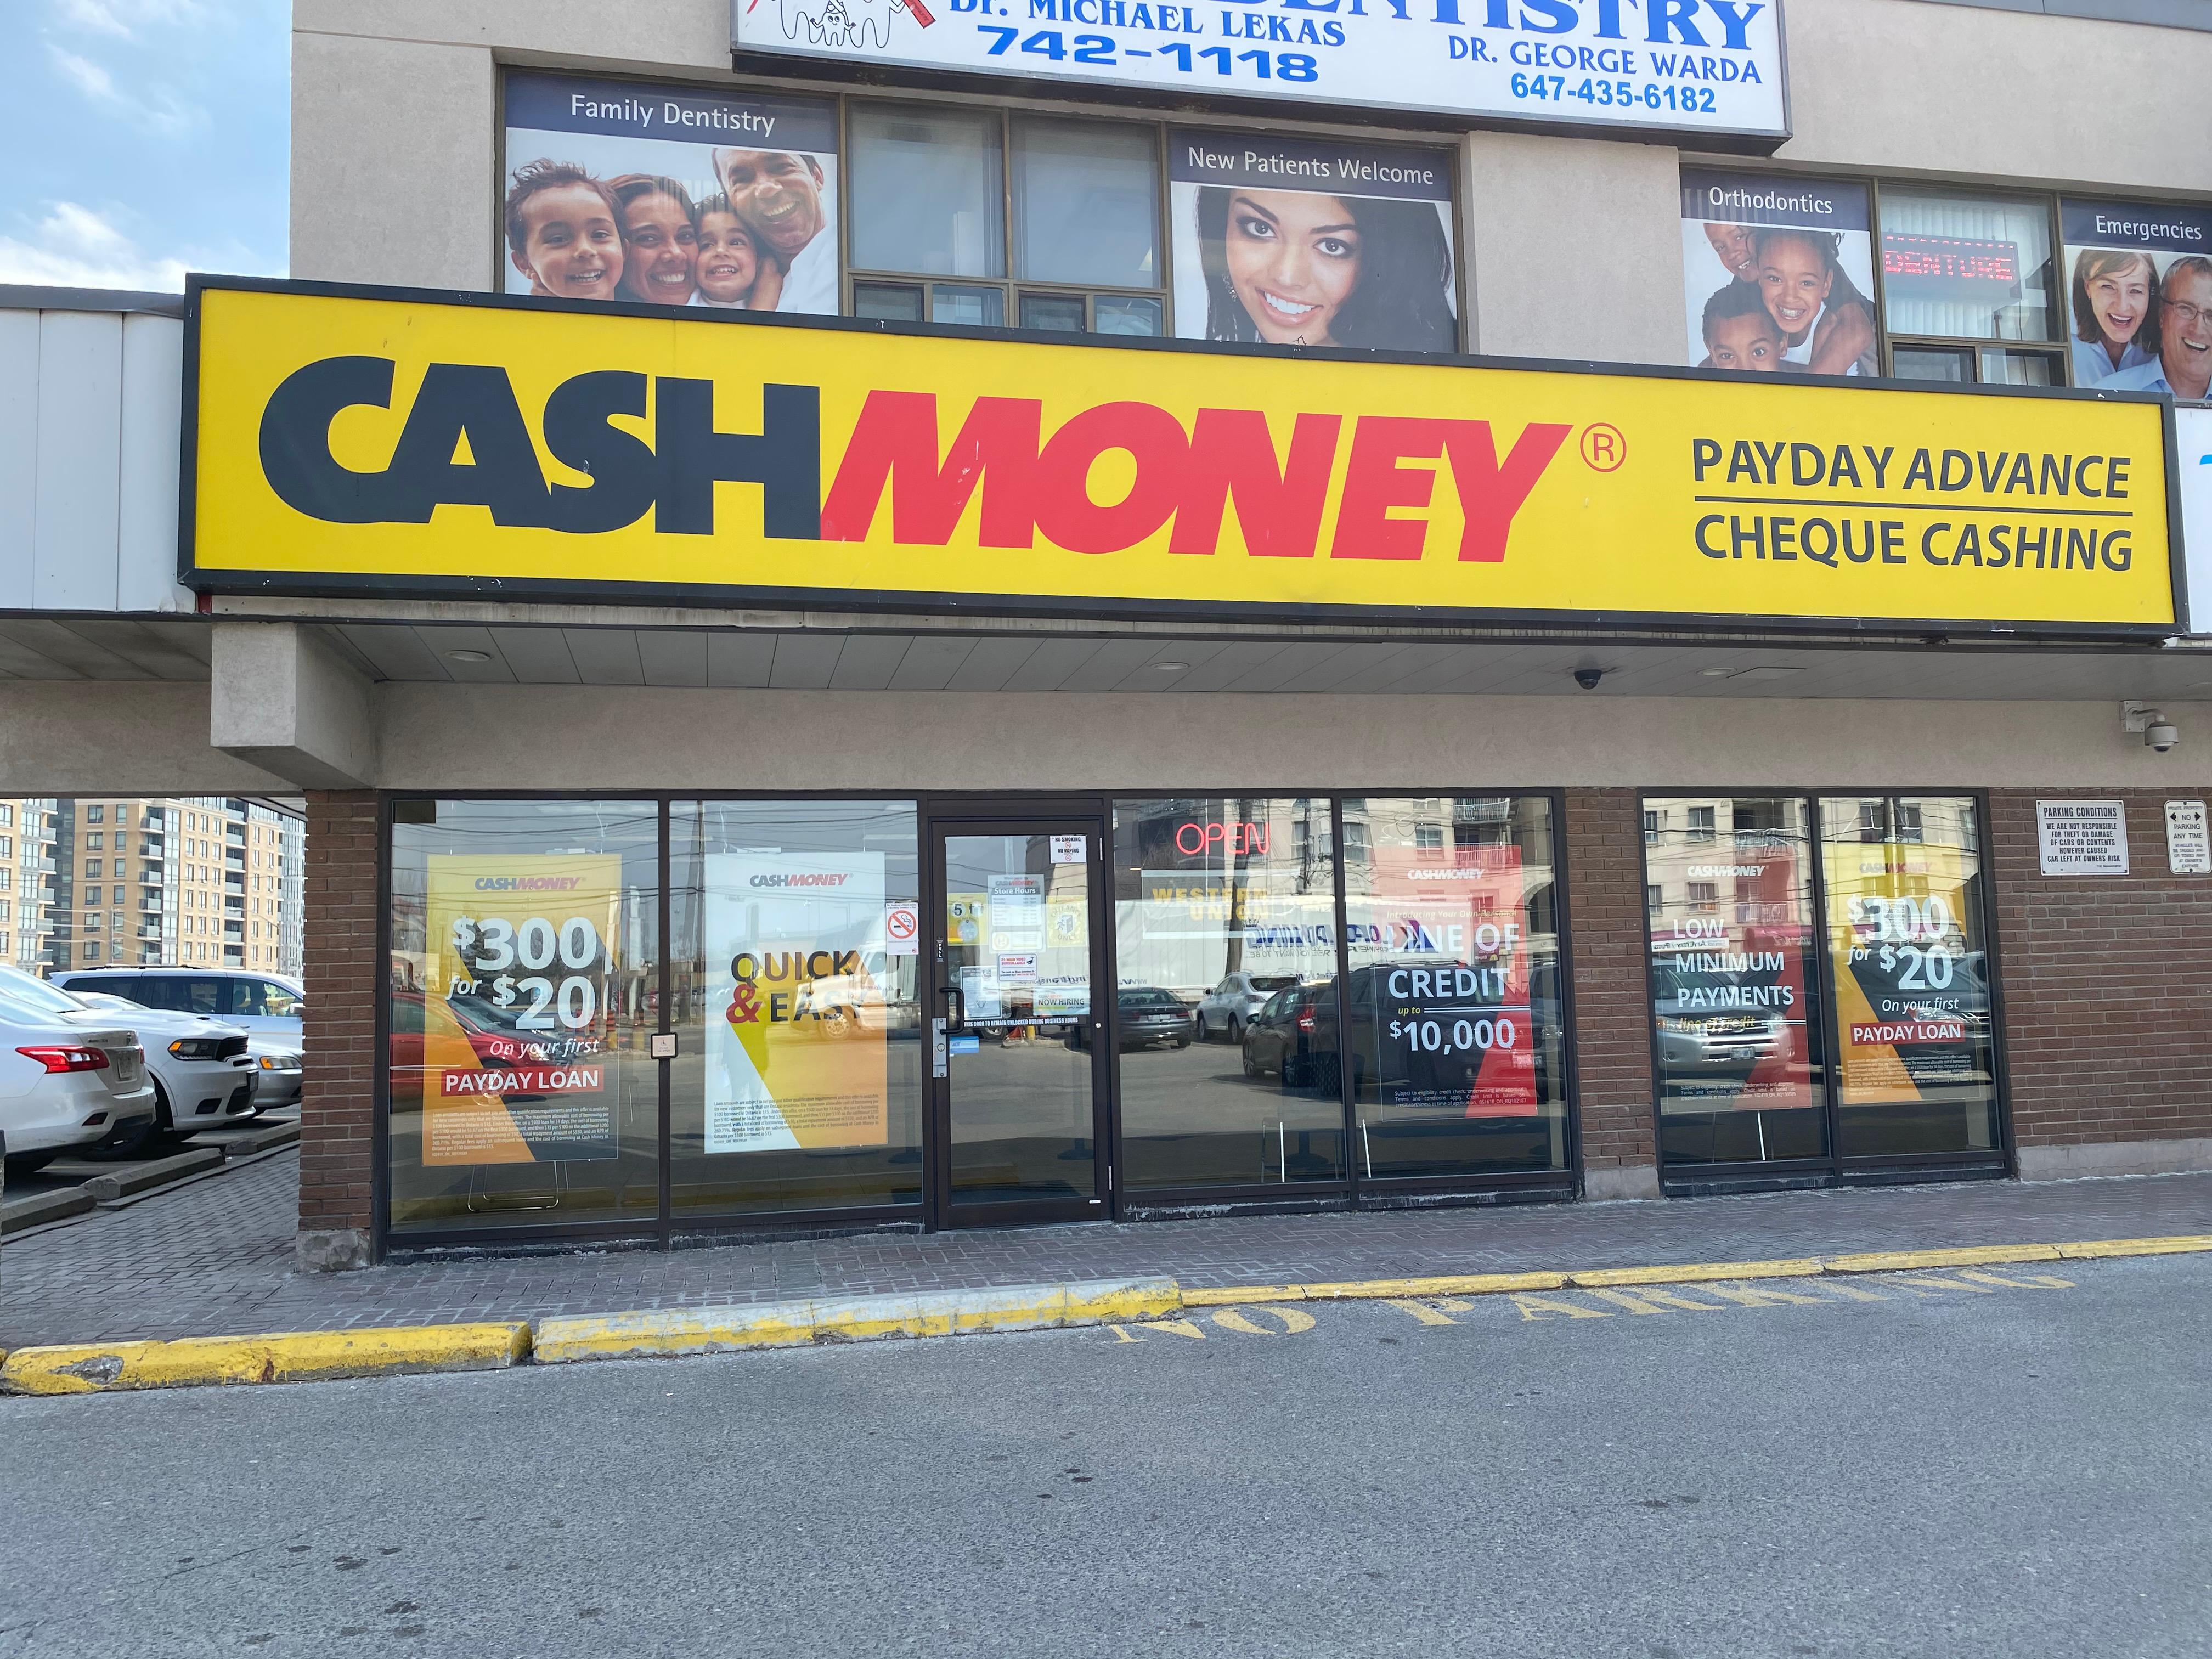 Cash Money store at 2363 Finch Ave W
Toronto, ON M9M 2W8 Cash Money Toronto (416)744-6911